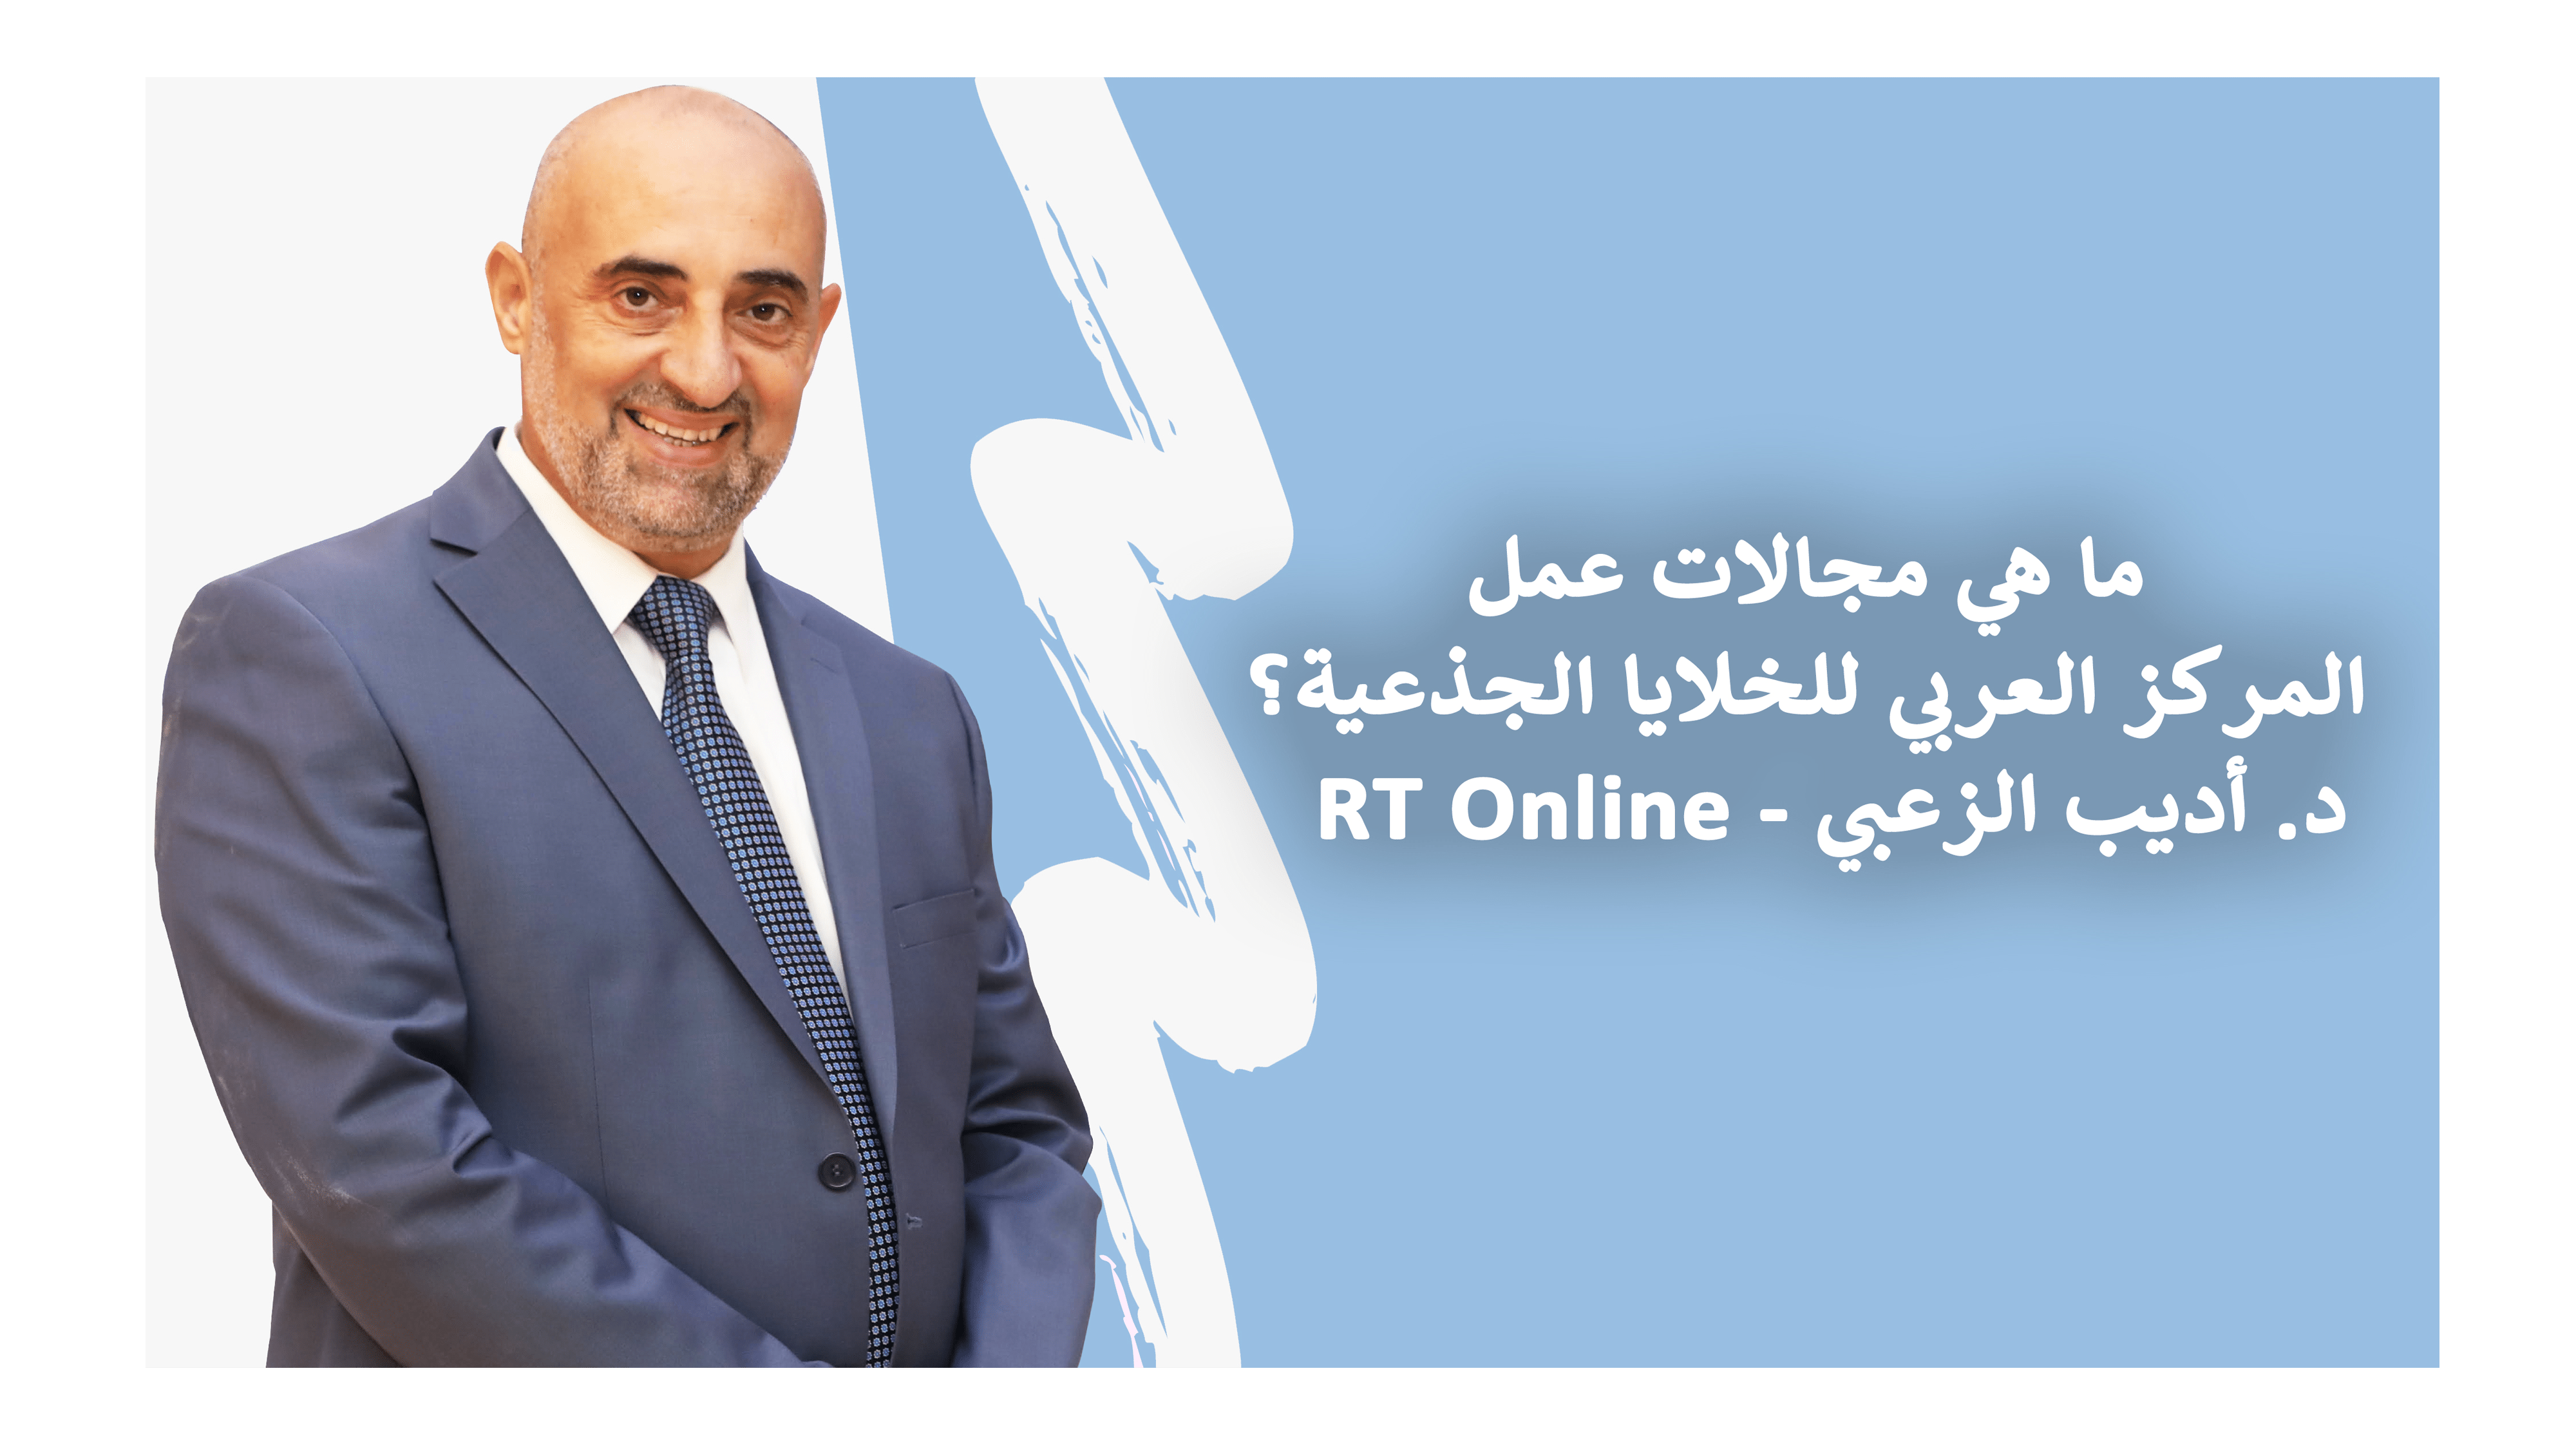 rt online - dr adeeb al zoubi